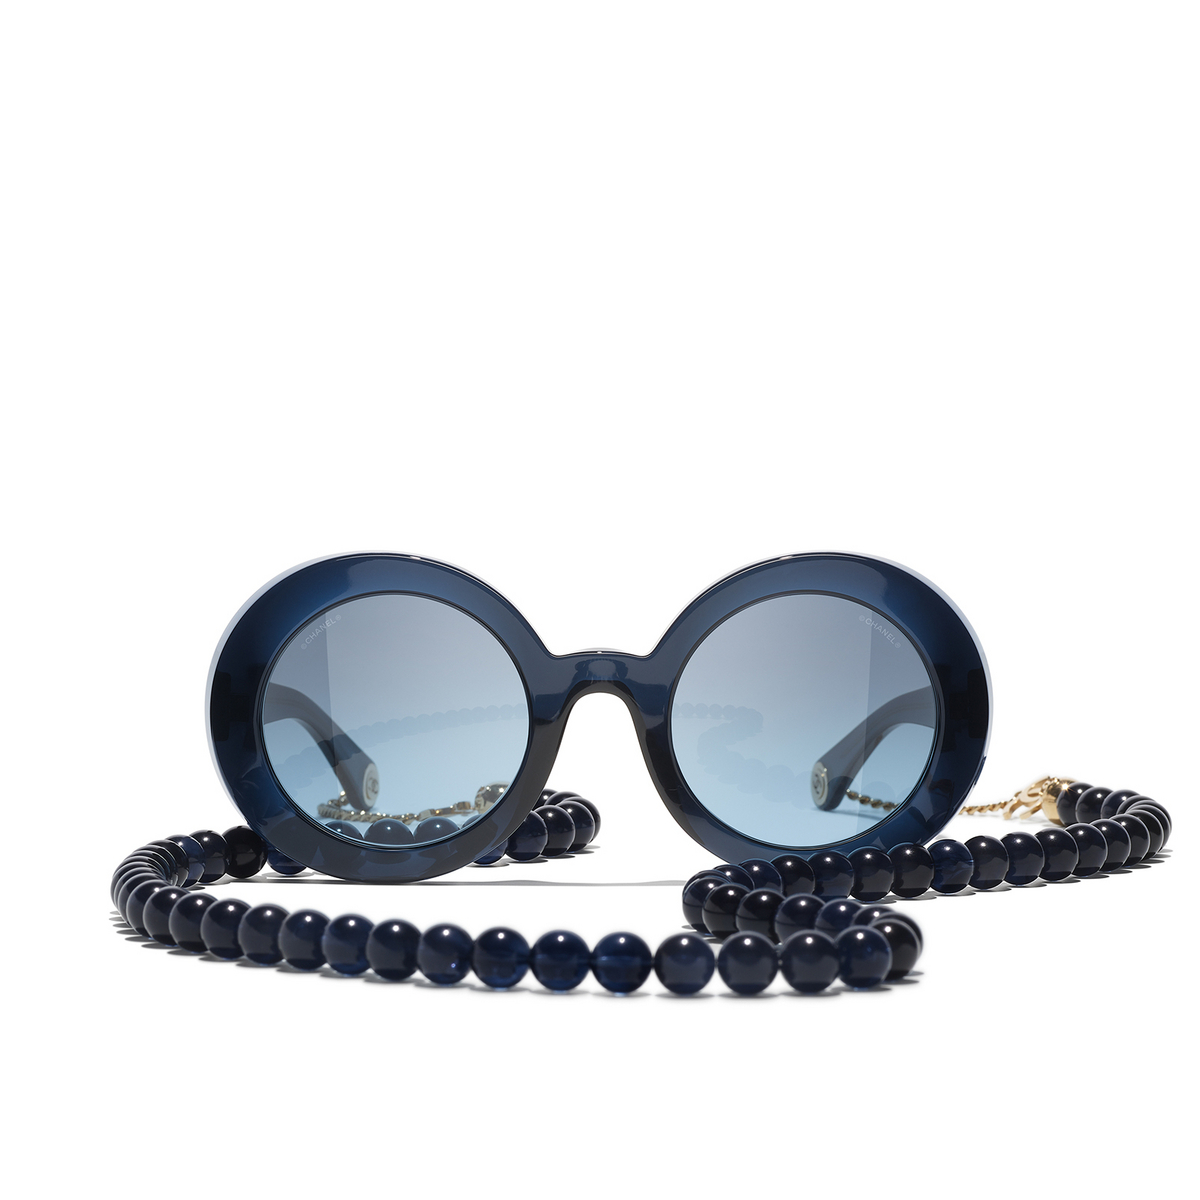 CHANEL round Sunglasses C503S2 Dark Blue & Gold - front view